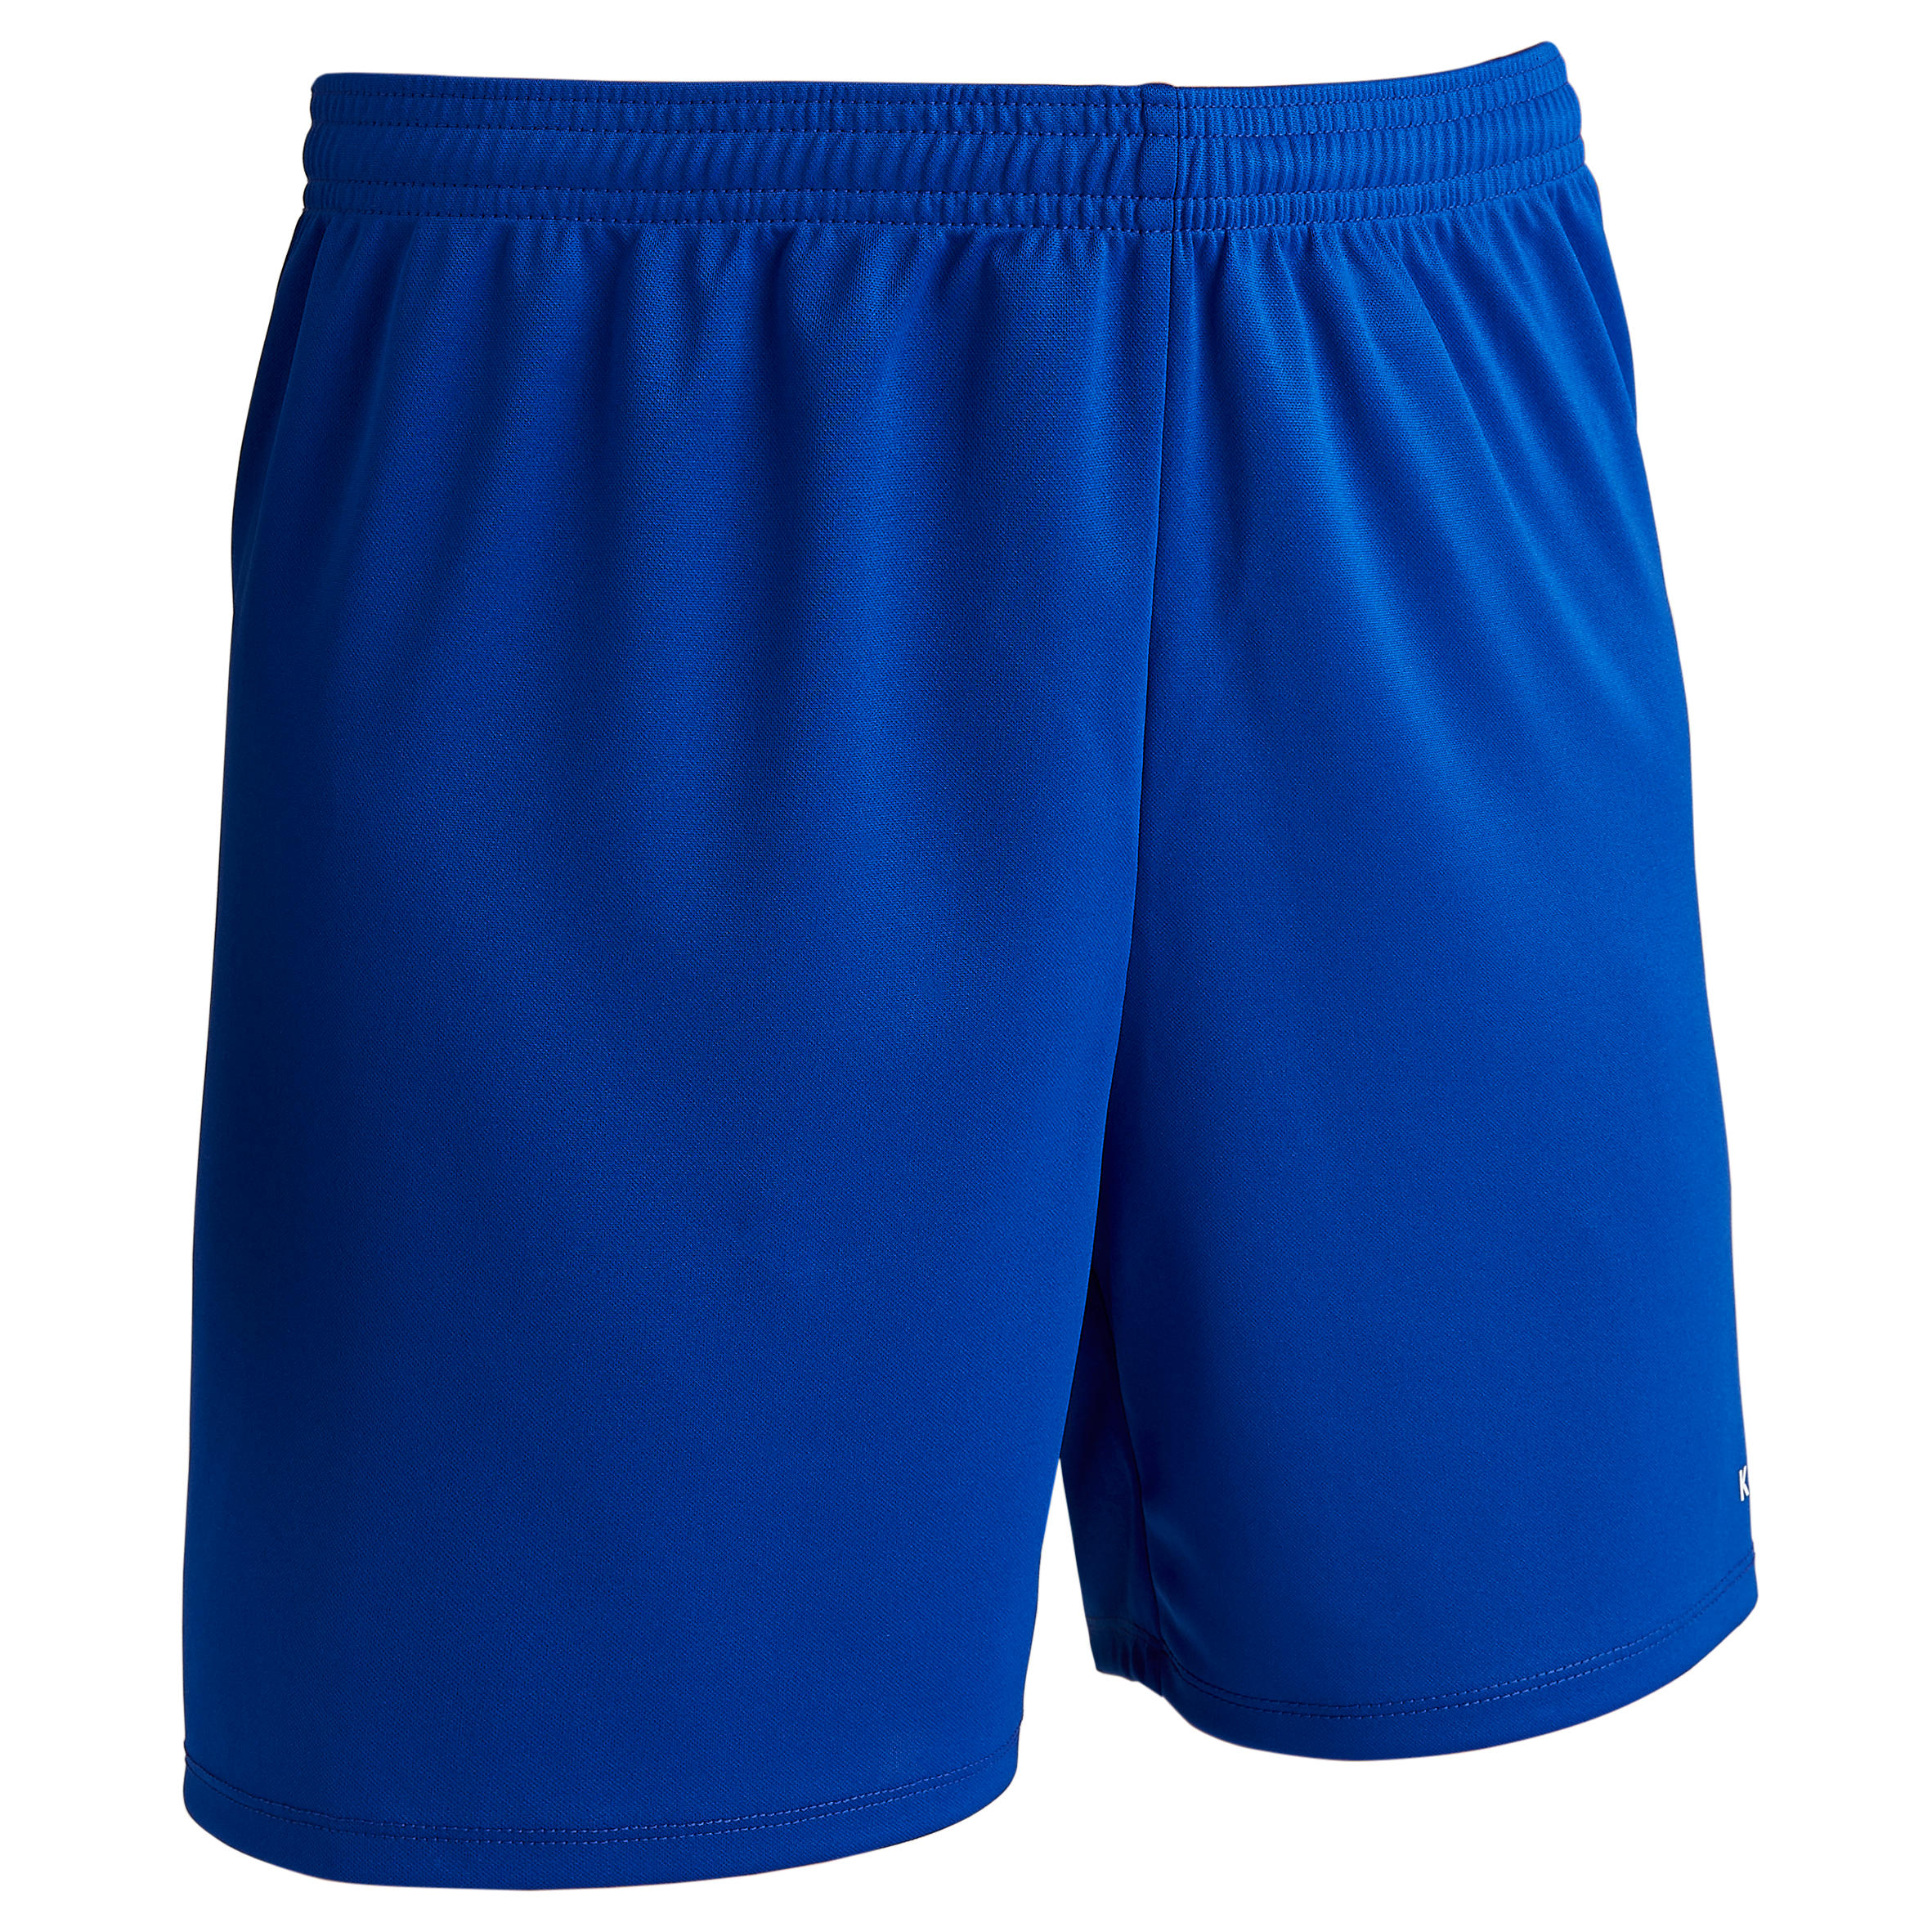 F100 Women's Football Shorts - Blue KIPSTA - Decathlon